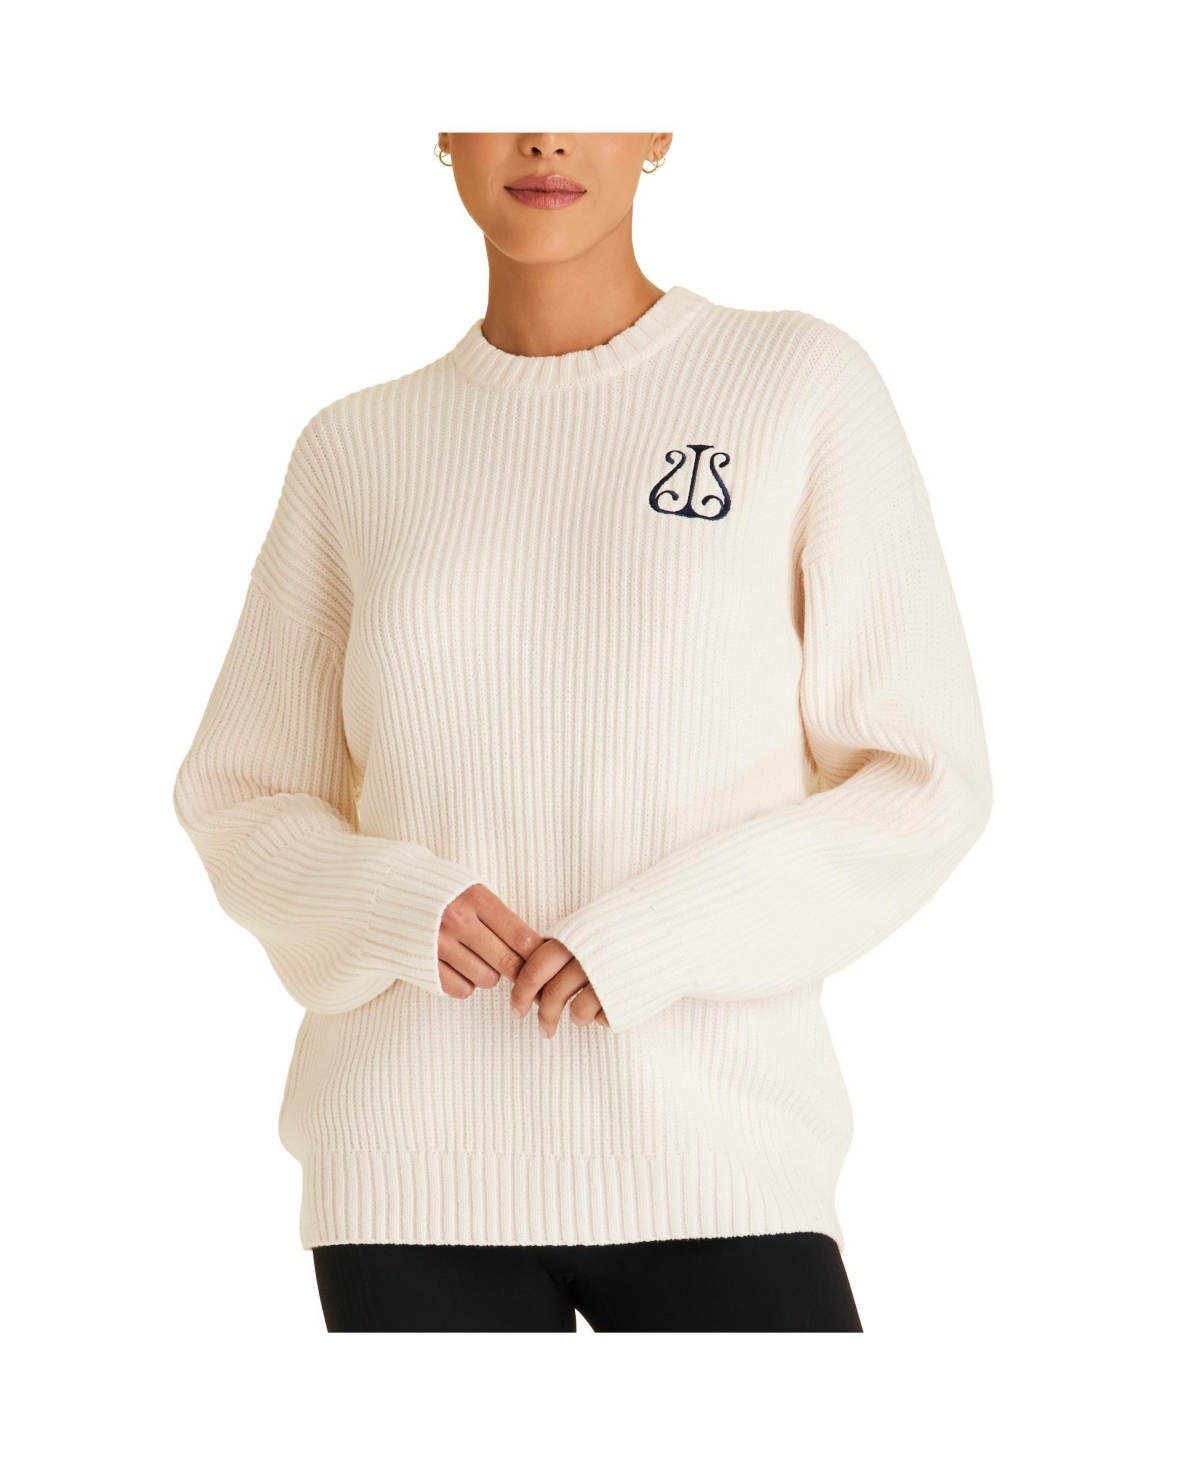 Adult Women Crest Sweater - Navy